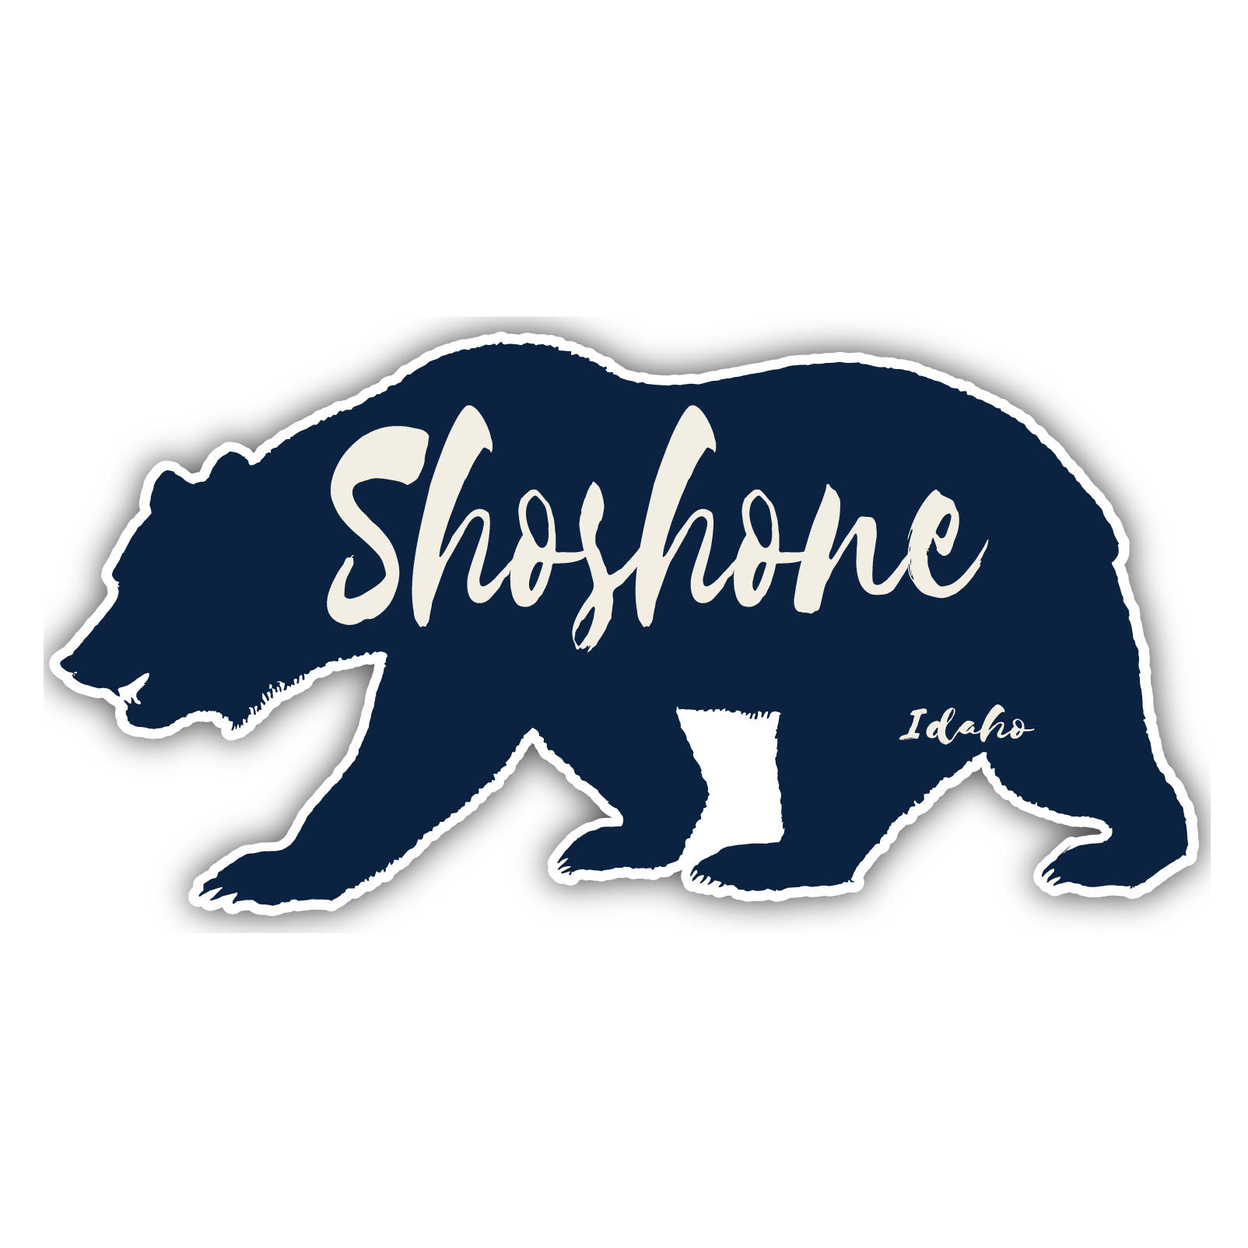 Shoshone Idaho Souvenir Decorative Stickers (Choose Theme And Size) - Single Unit, 4-Inch, Great Outdoors